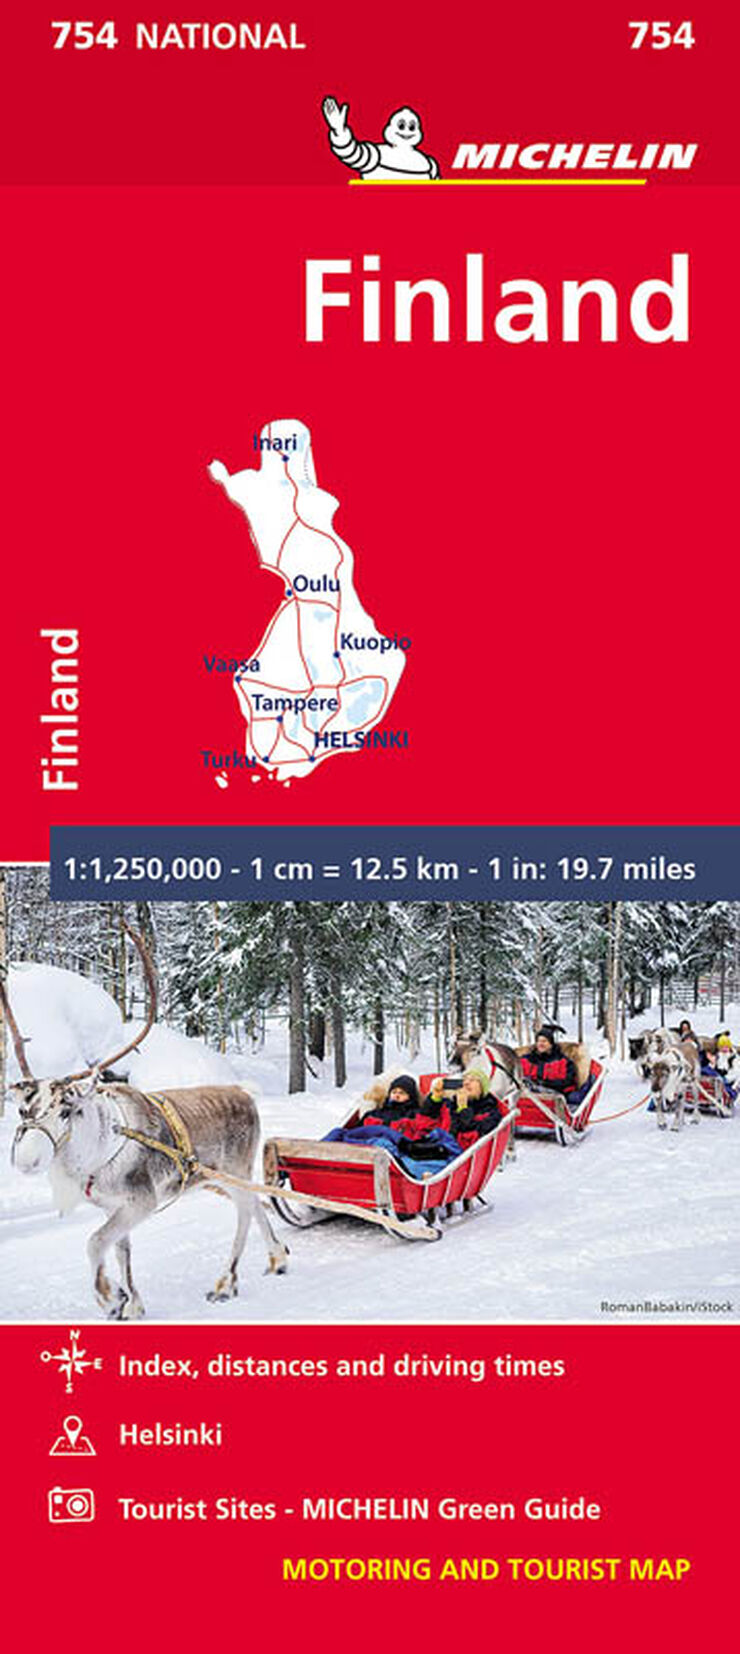 Mapa National Finlandia